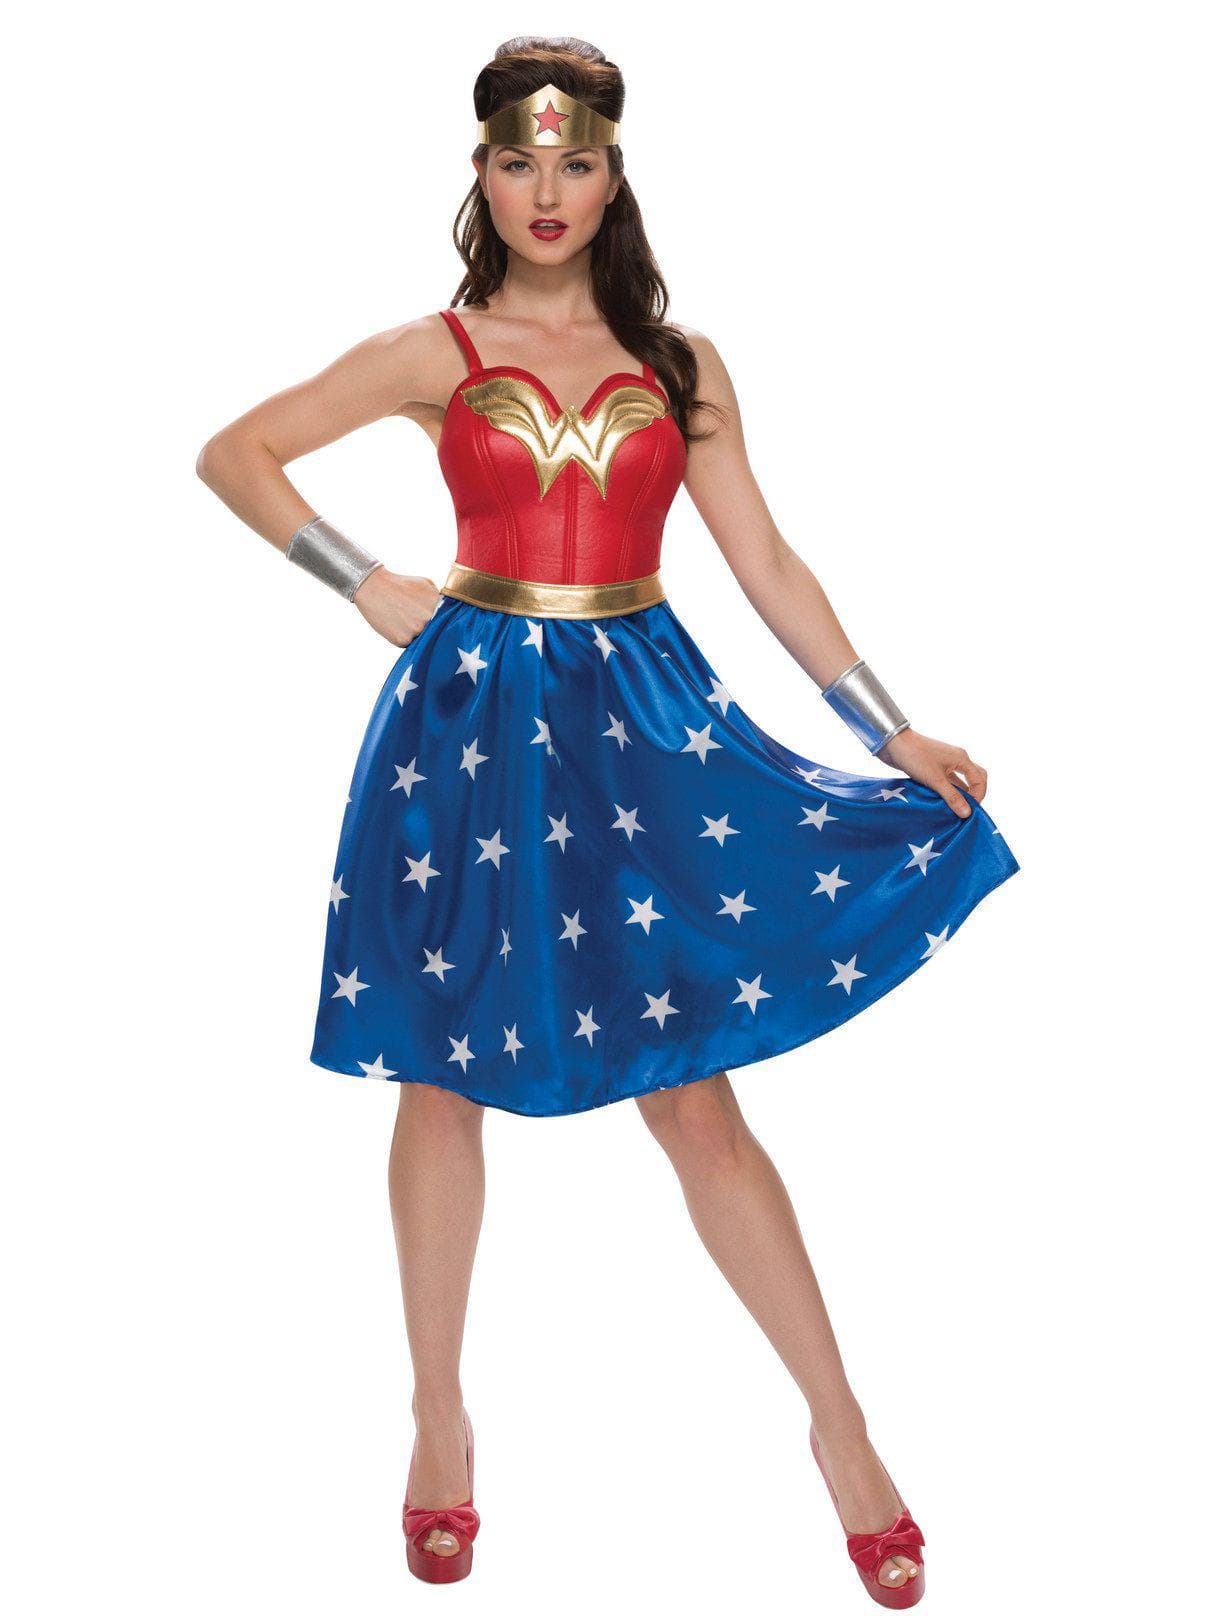 Adult Justice League Wonder Woman Costume - costumes.com